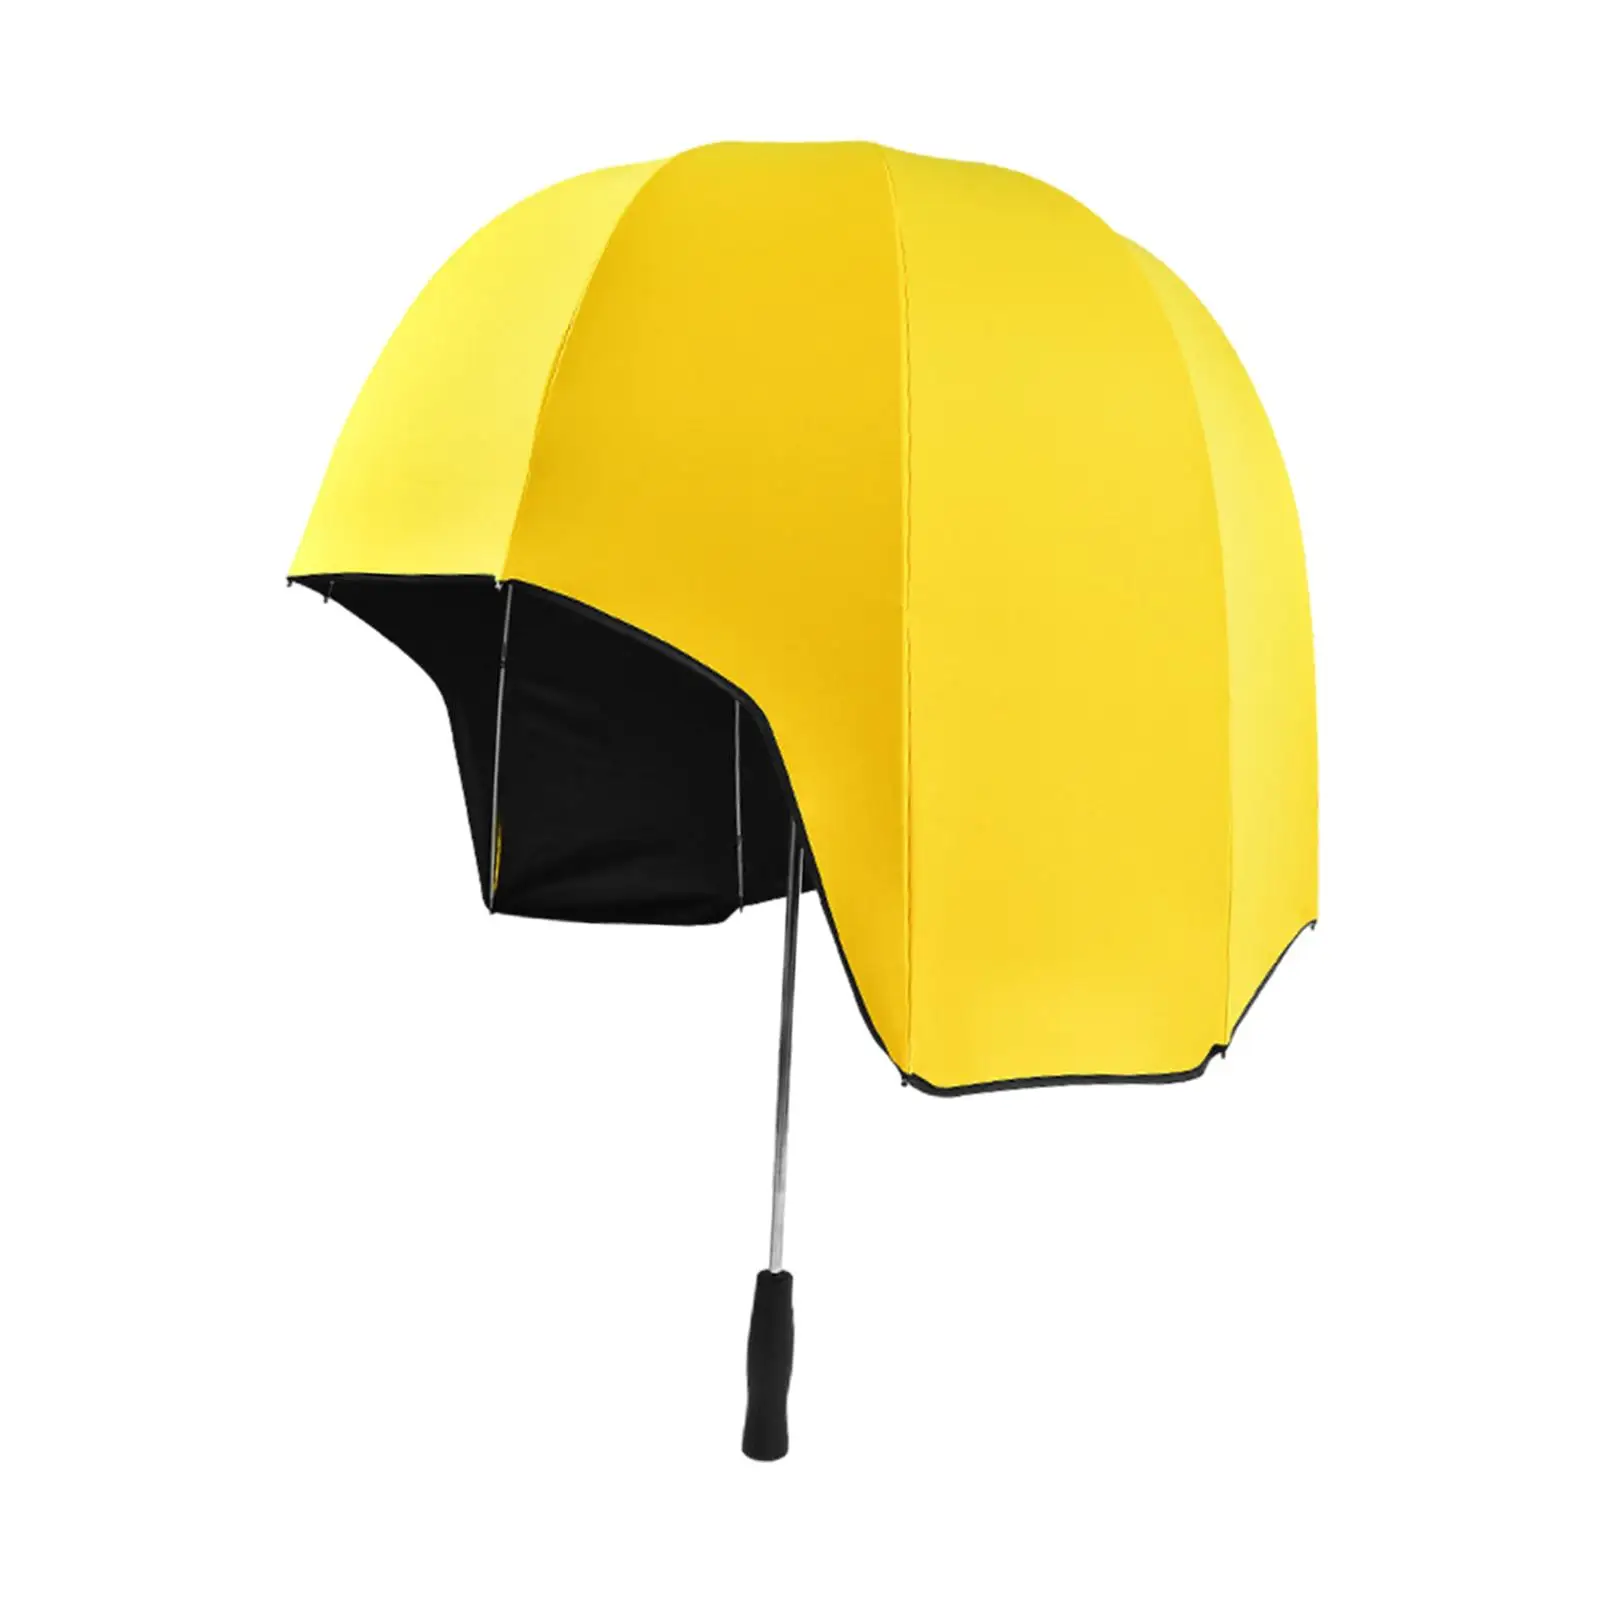 Dual Use Umbrella Waterproof PU Handle for Women Sun Umbrella Rain Umbrellas for Beach Travel Outdoor Activities Trips Hiking